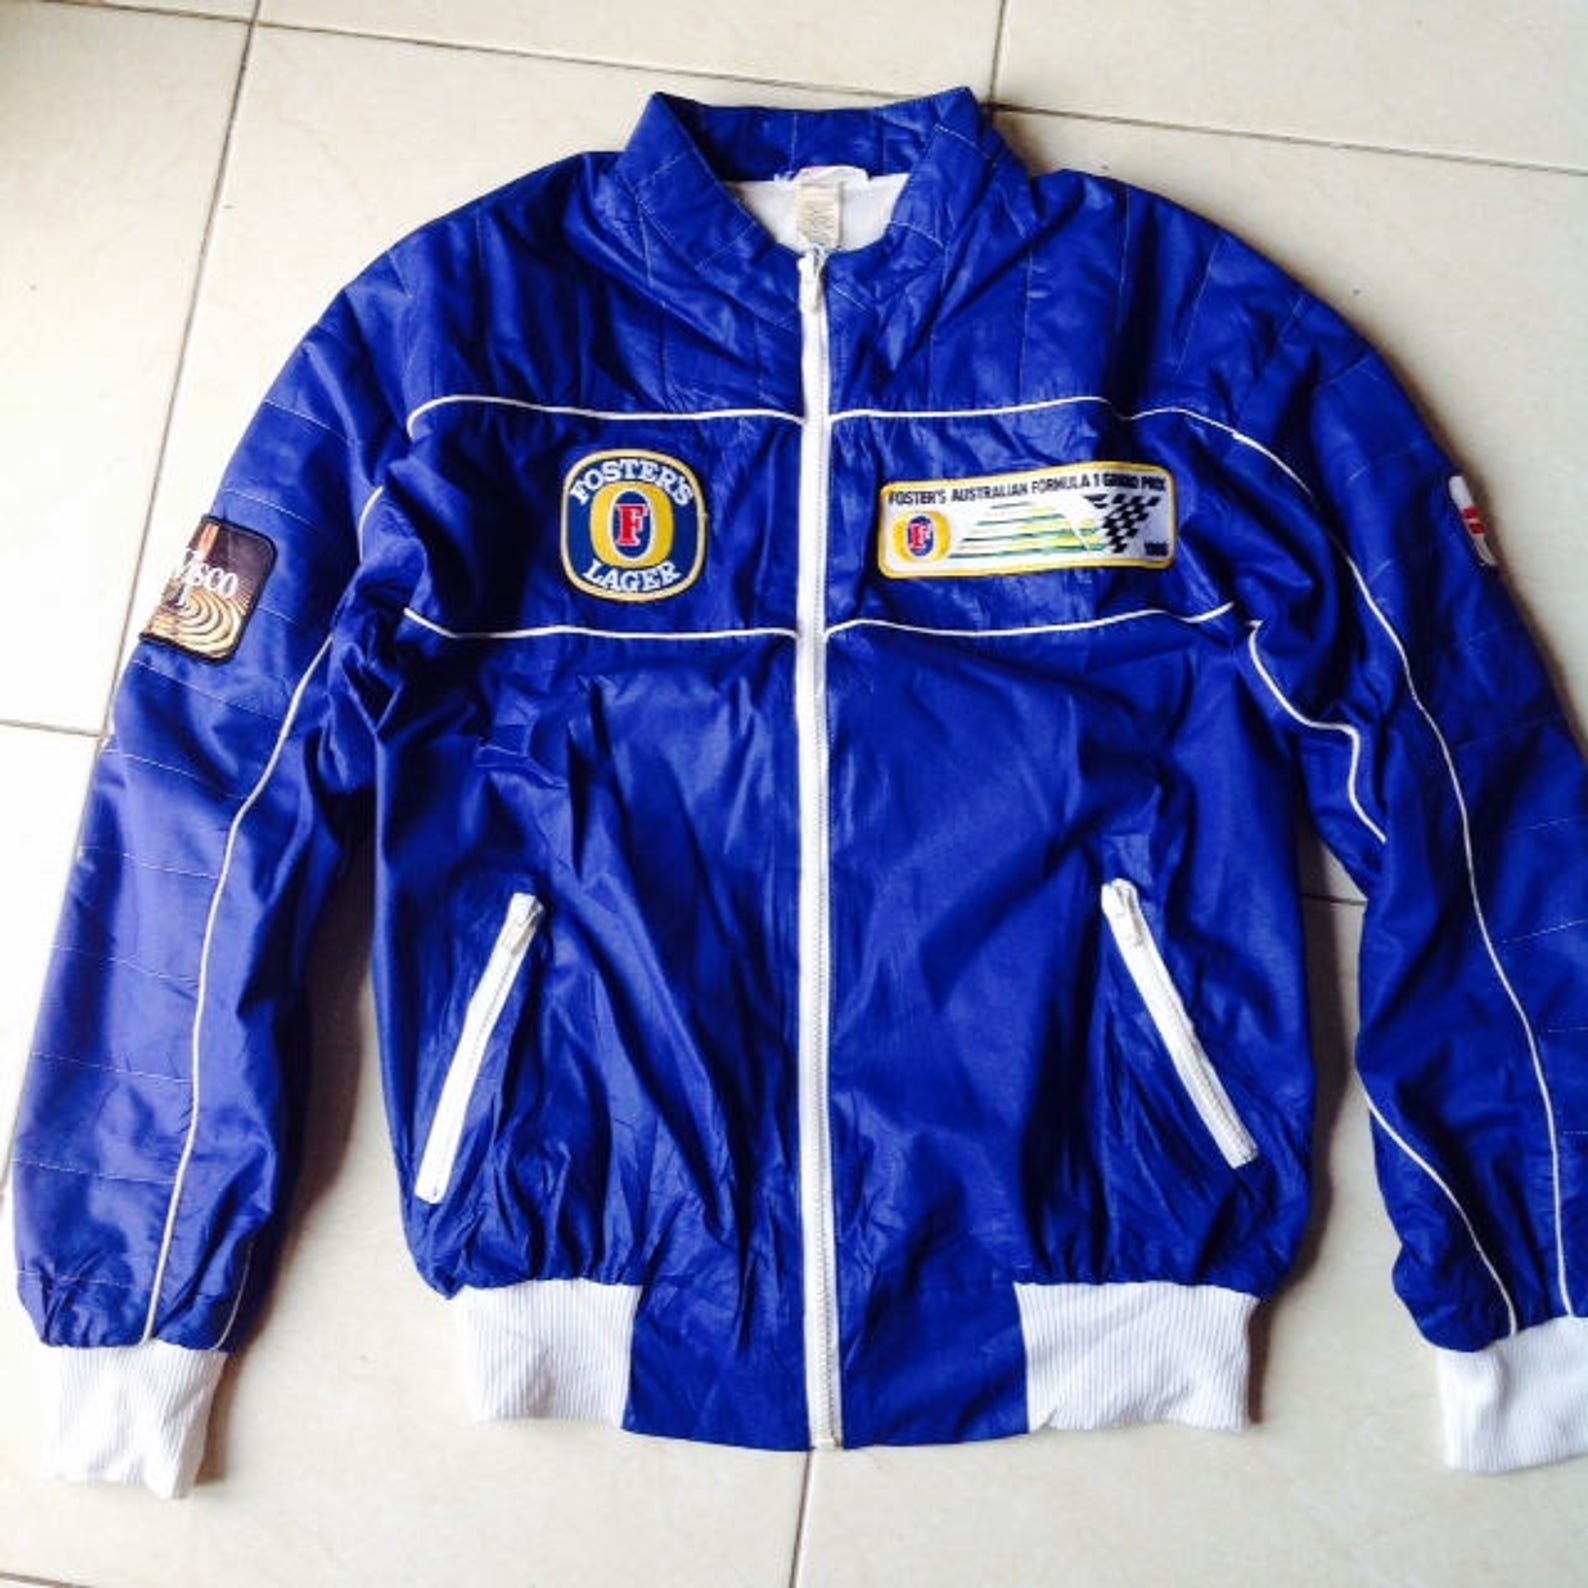 Vintage 1986 FOSTERS F1 australia grand prix team jacket size | Etsy